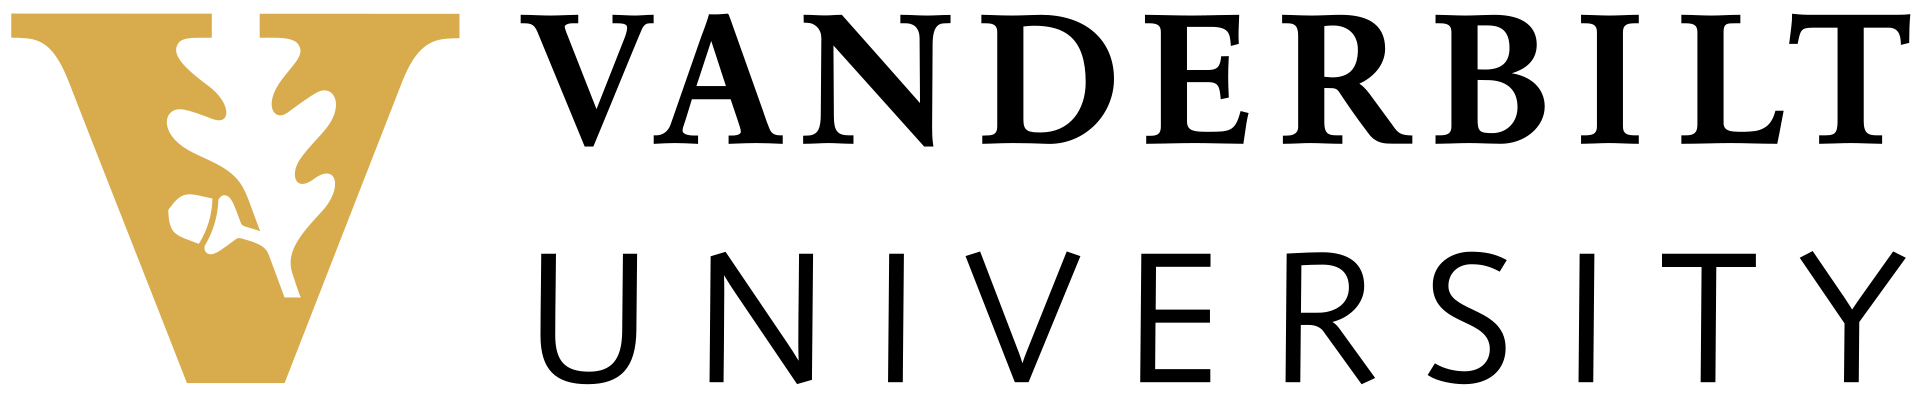 Vanderbilt University logo, By Source, Fair use, http://en.维基百科.org/w/index.php?curid = 13301785 "